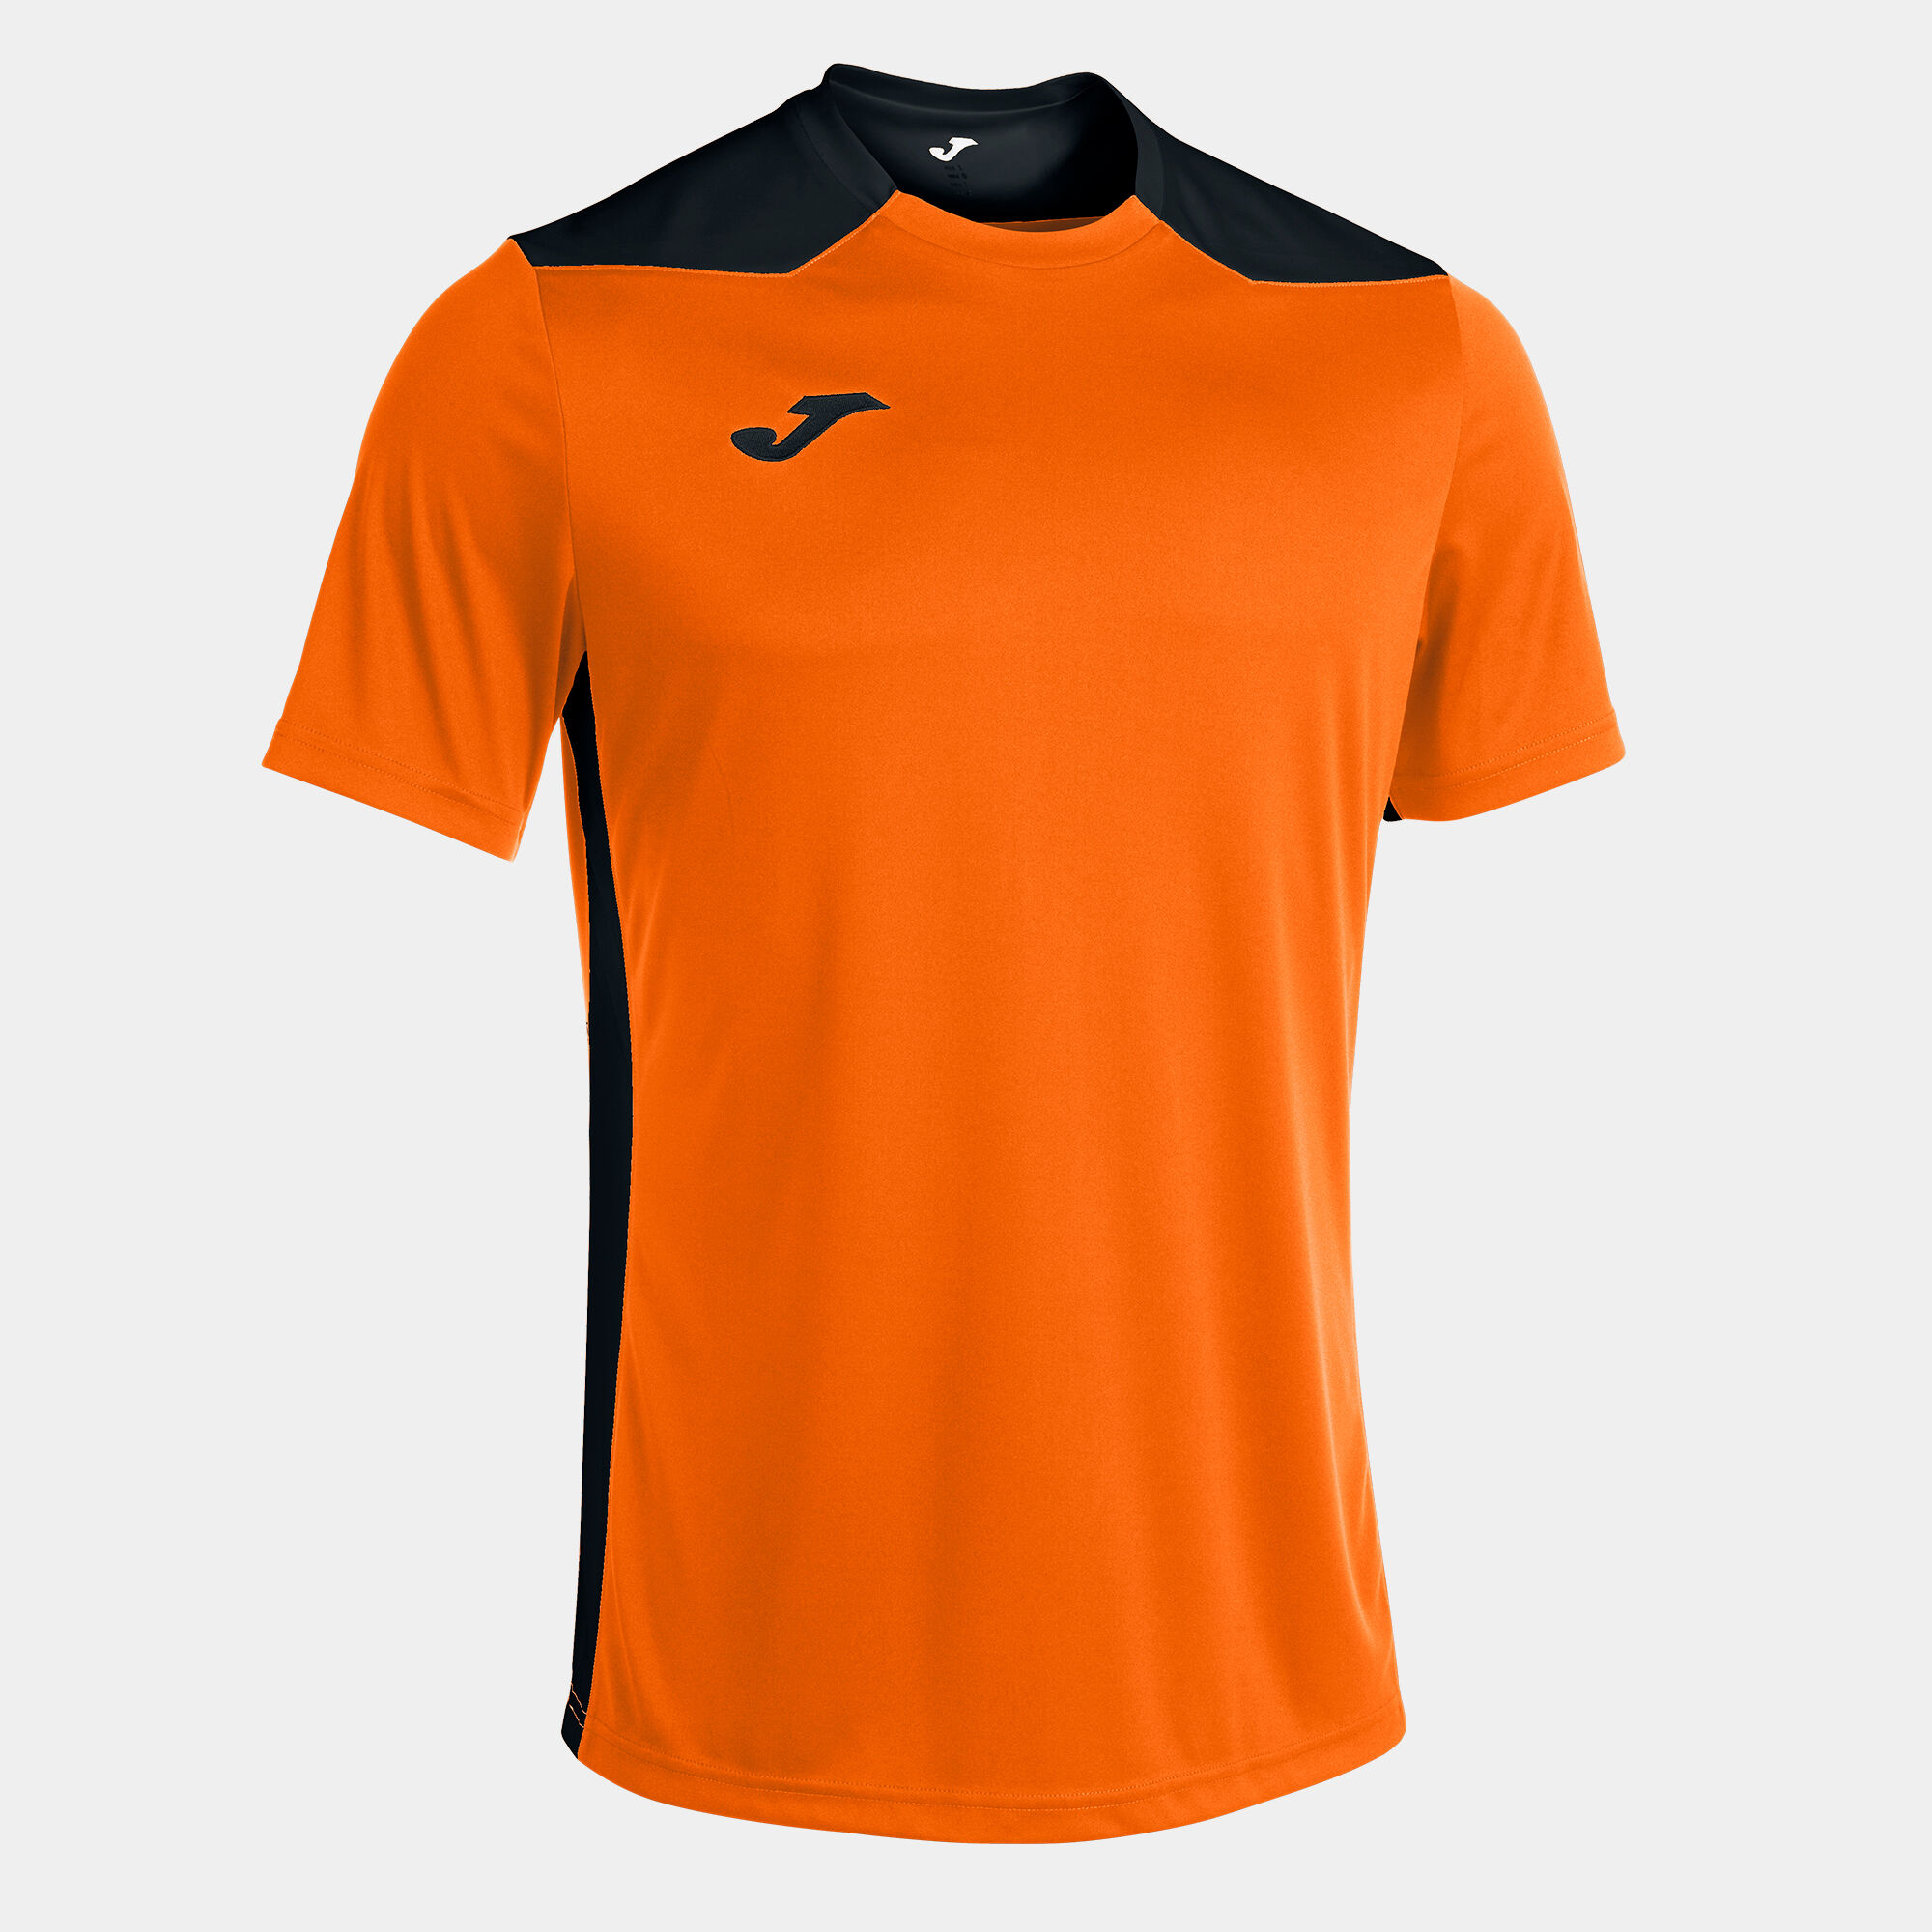 Shirt short sleeve man Championship VI orange black